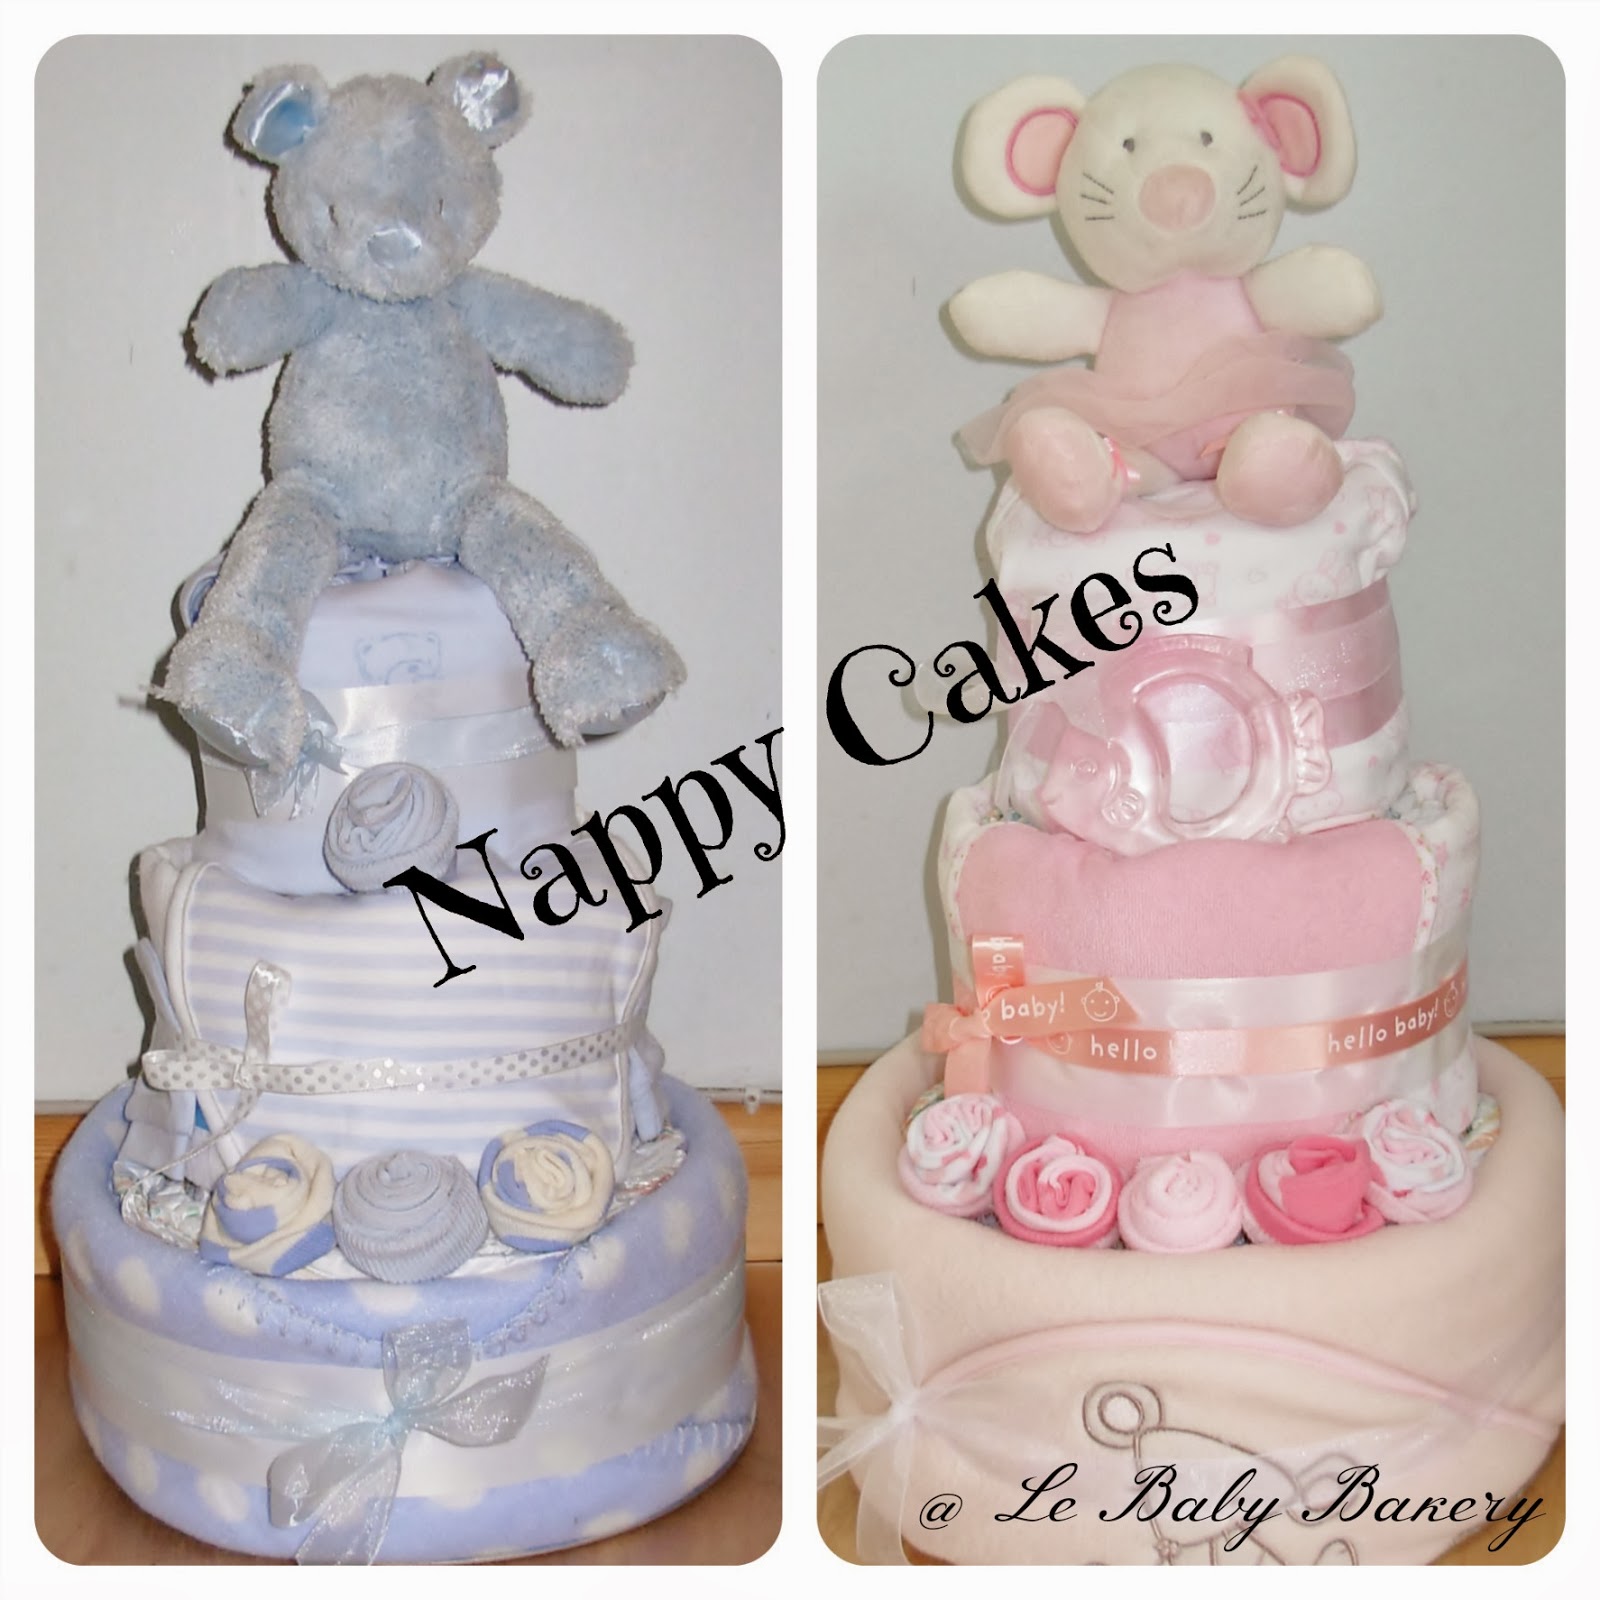 http://lebabybakery.blogspot.co.uk/p/nappy-cakes.html